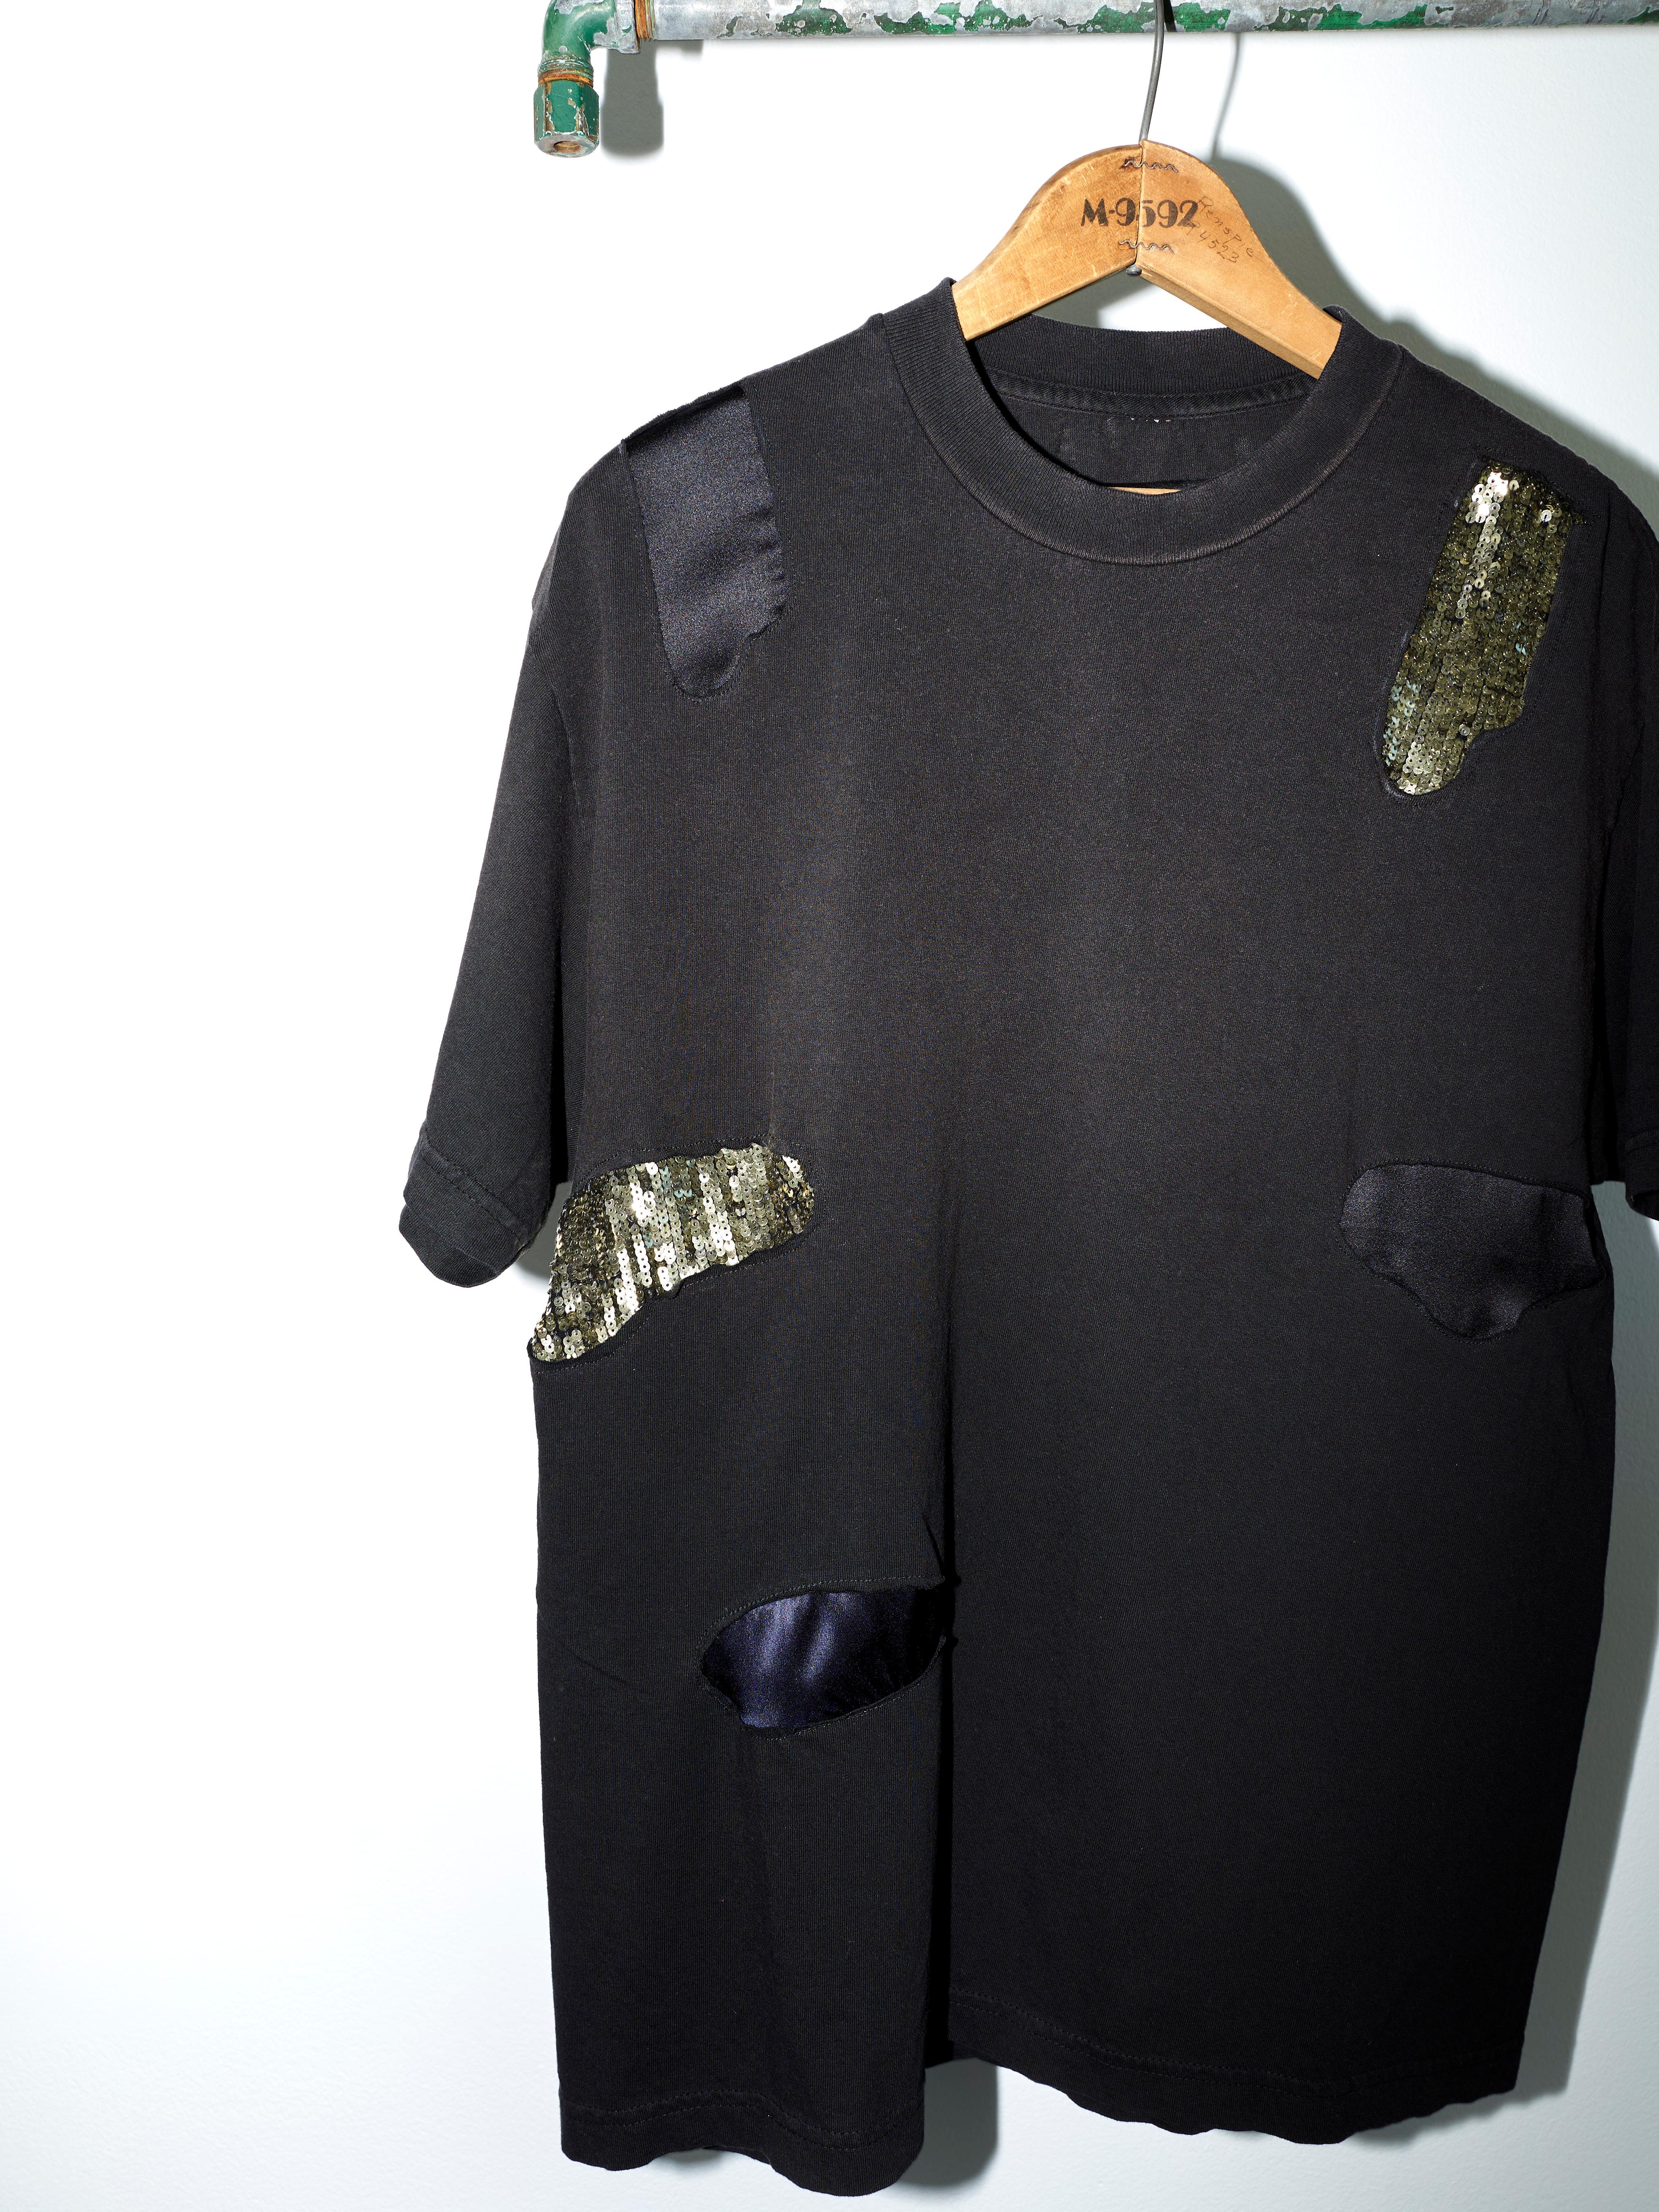 J Dauphin Black T-Shirt Embellished  Patch Work Sequin Silk Body Cotton  2